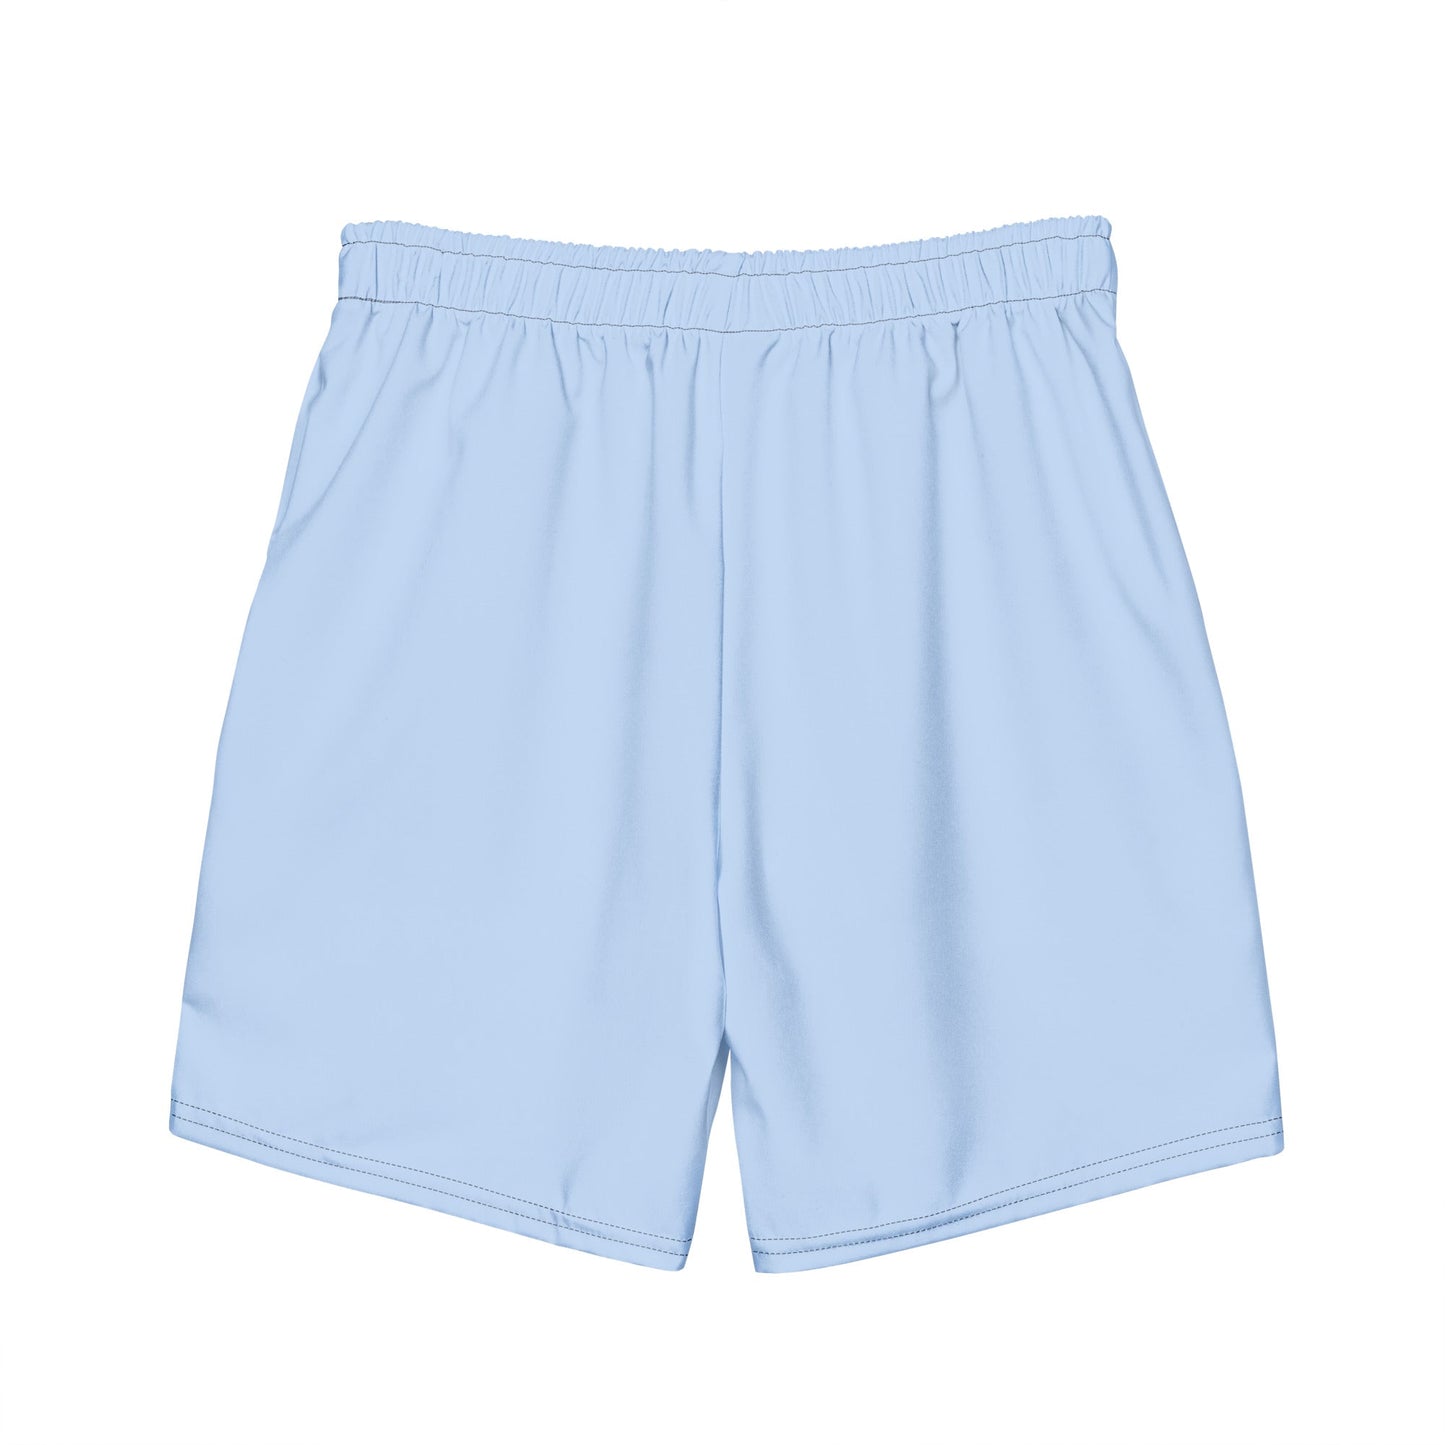 Men's Blue Eco Board Shorts - Tropical Seas Clothing 